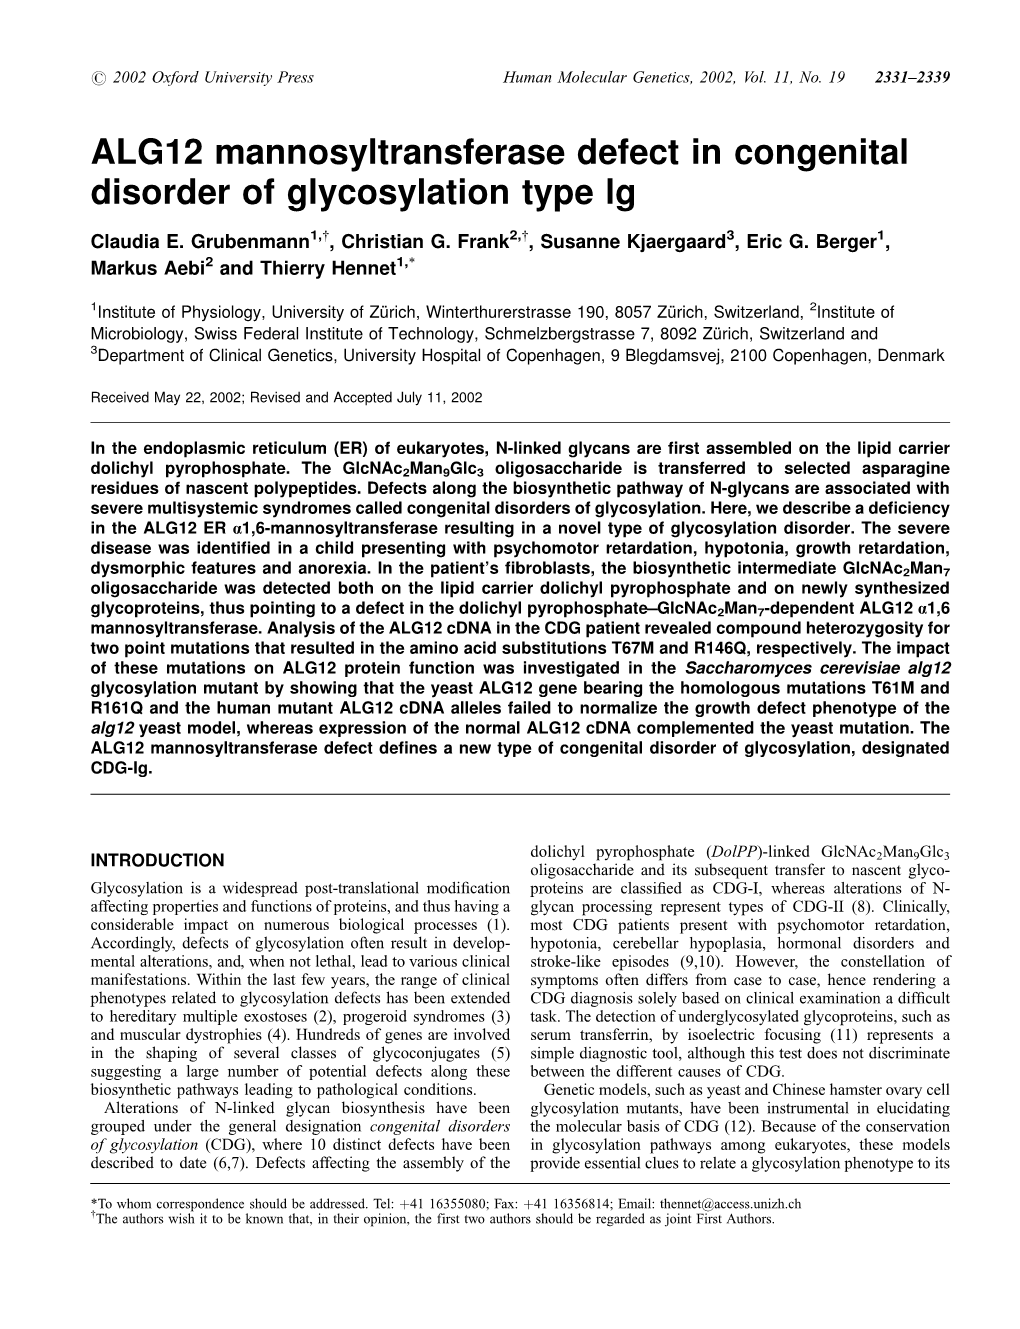 ALG12 Mannosyltransferase Defect in Congenital Disorder of Glycosylation Type Lg